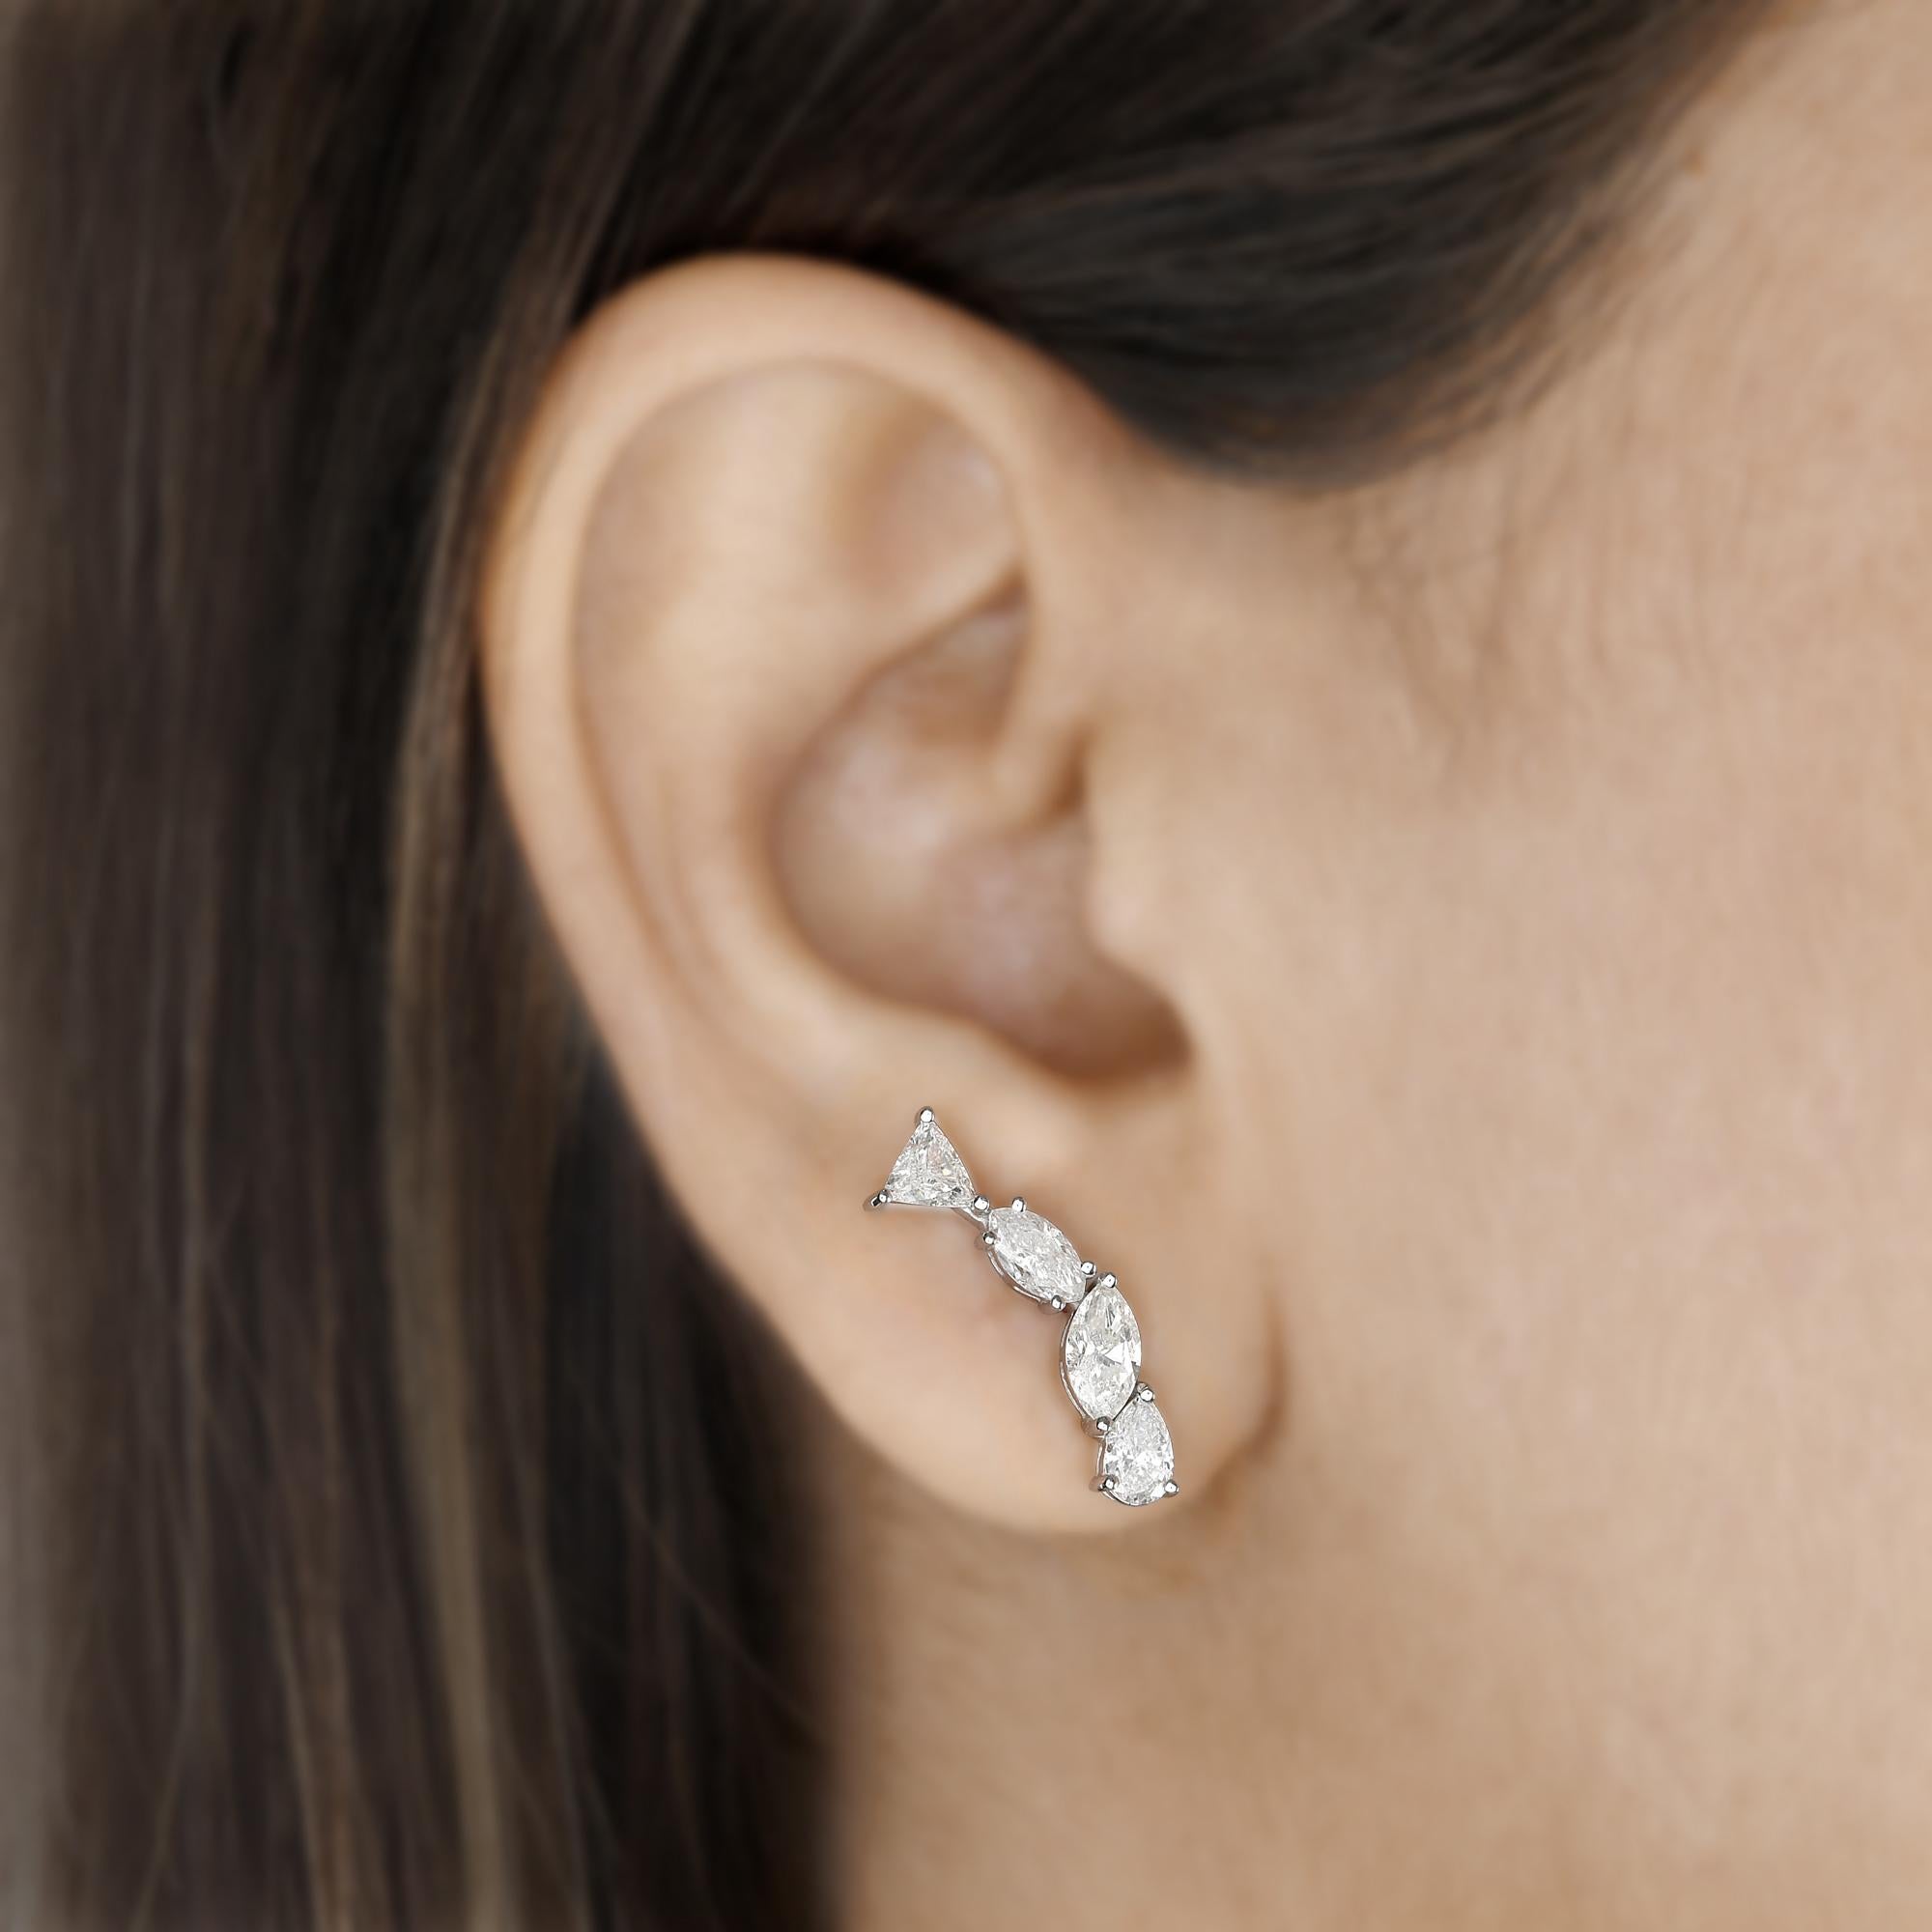 Pear Cut 2.22 Carat Marquise Pear Trillion Shape Diamond Earrings 10k White Gold Jewelry For Sale